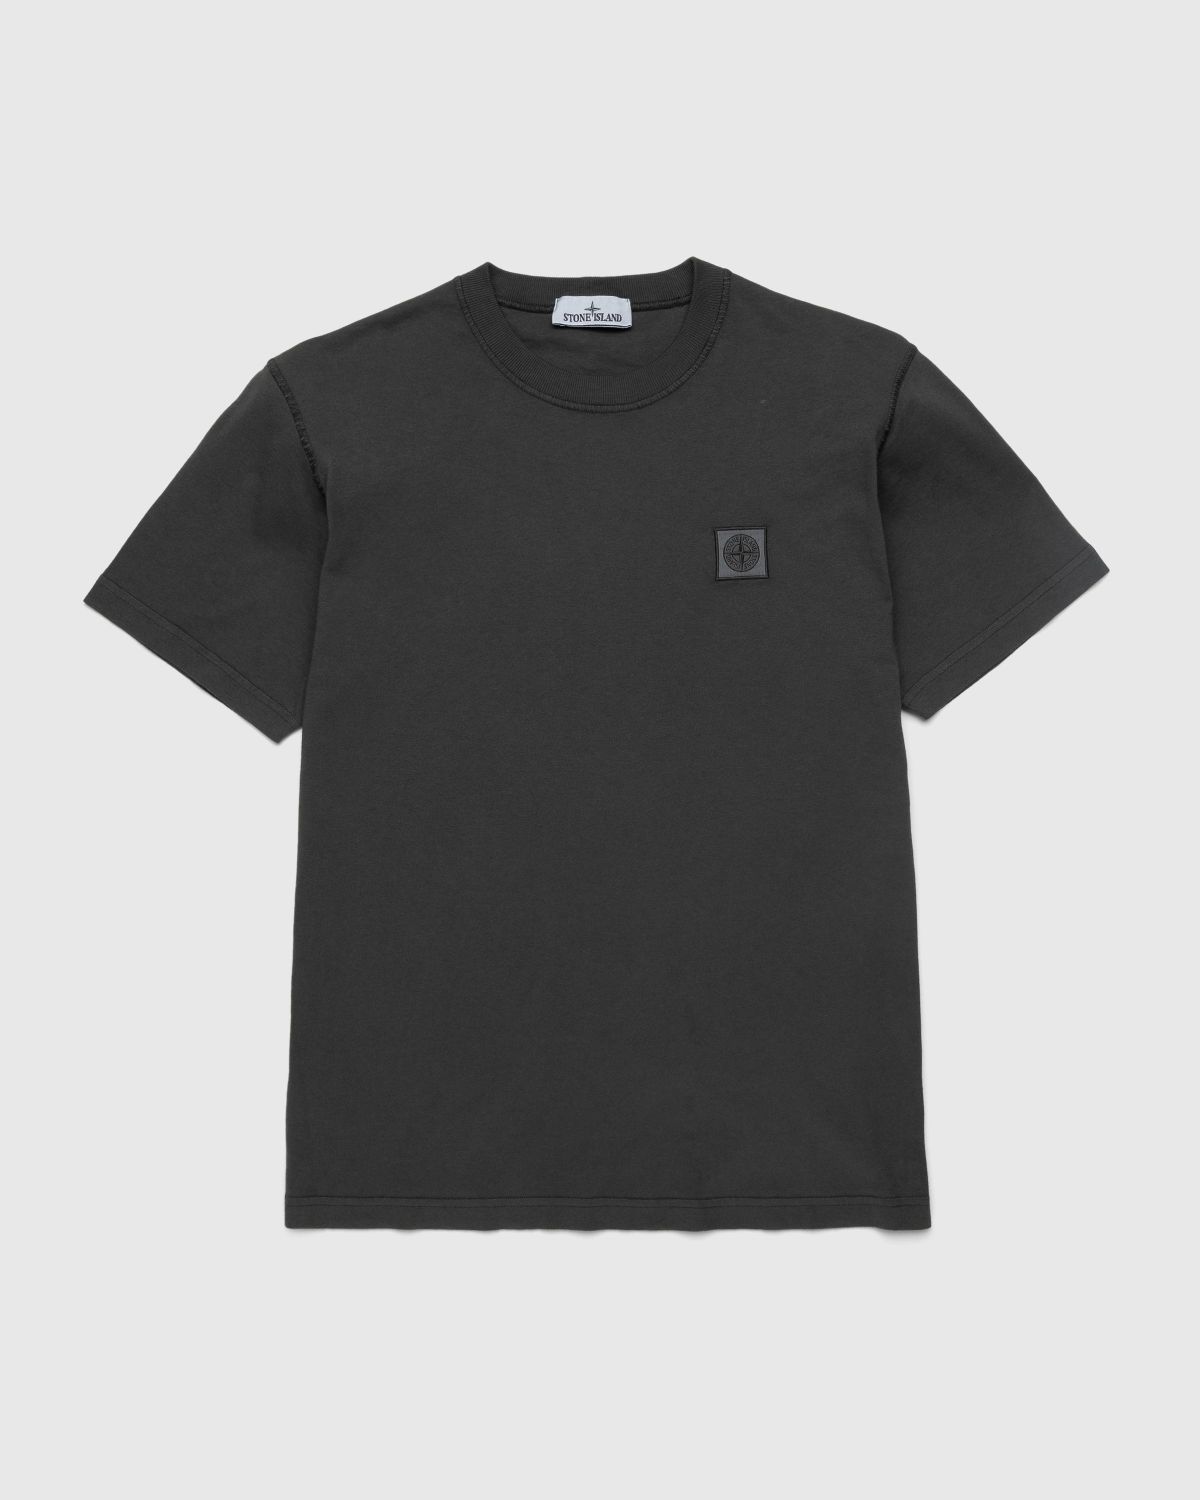 Stone Island – T-Shirt Charcoal 23757 | Highsnobiety Shop